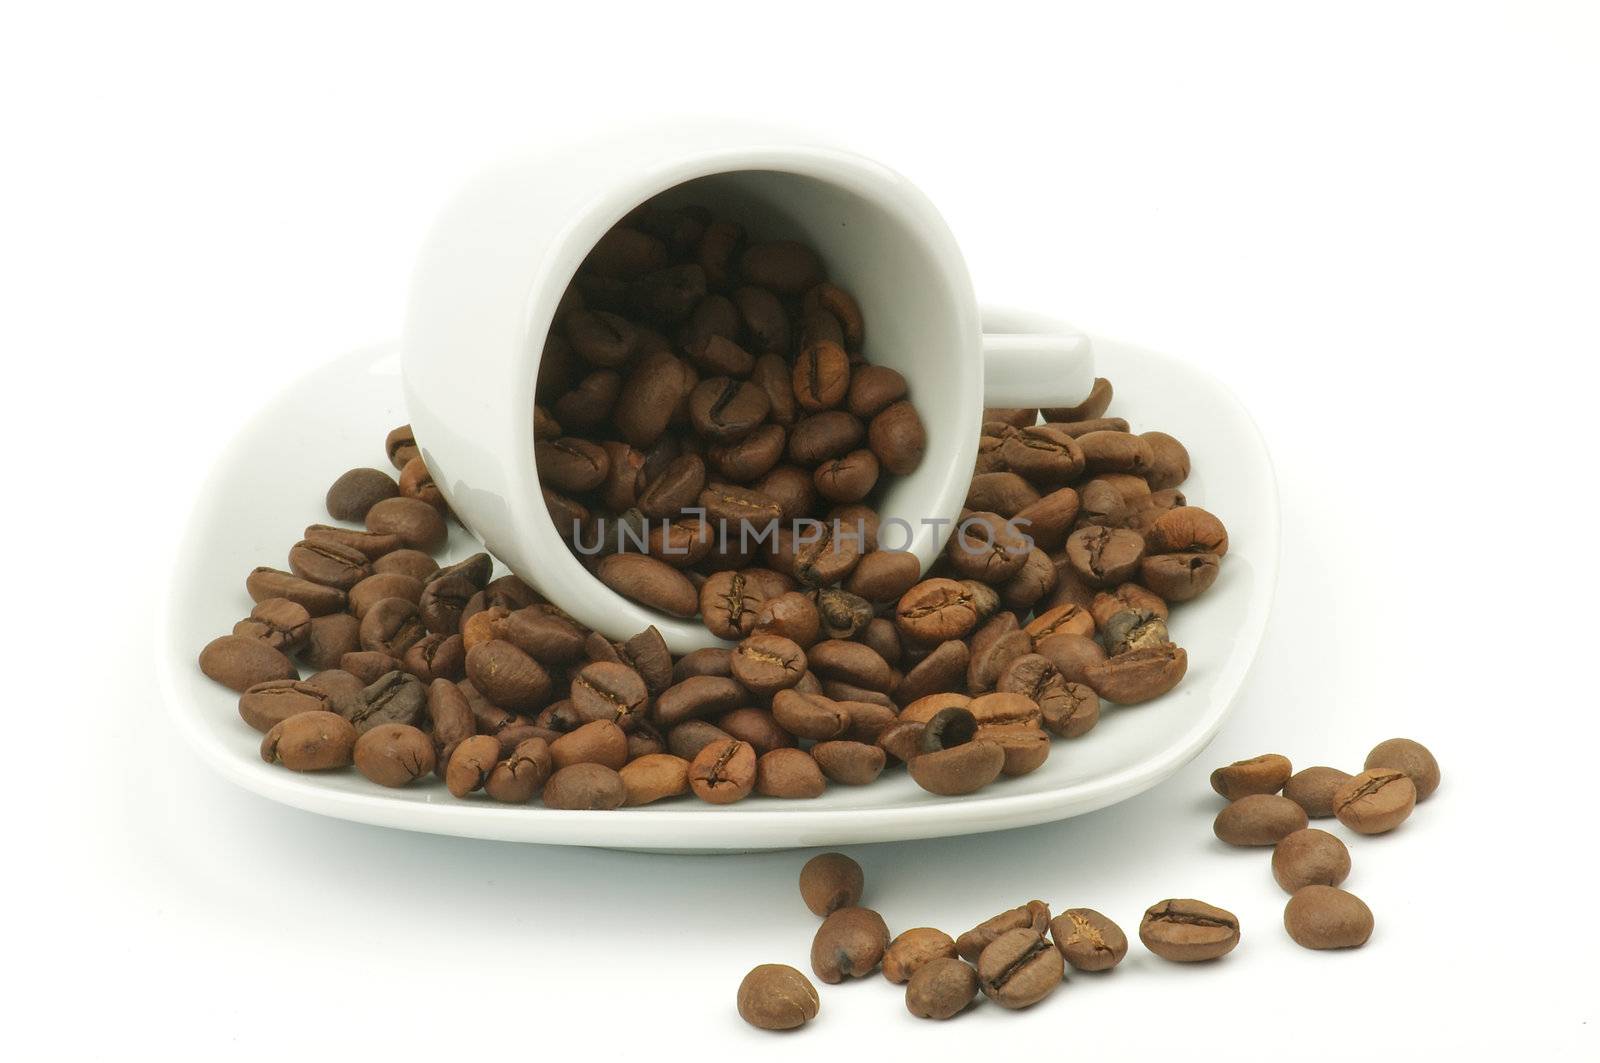 Coffee mug with coffee beans by zhekos